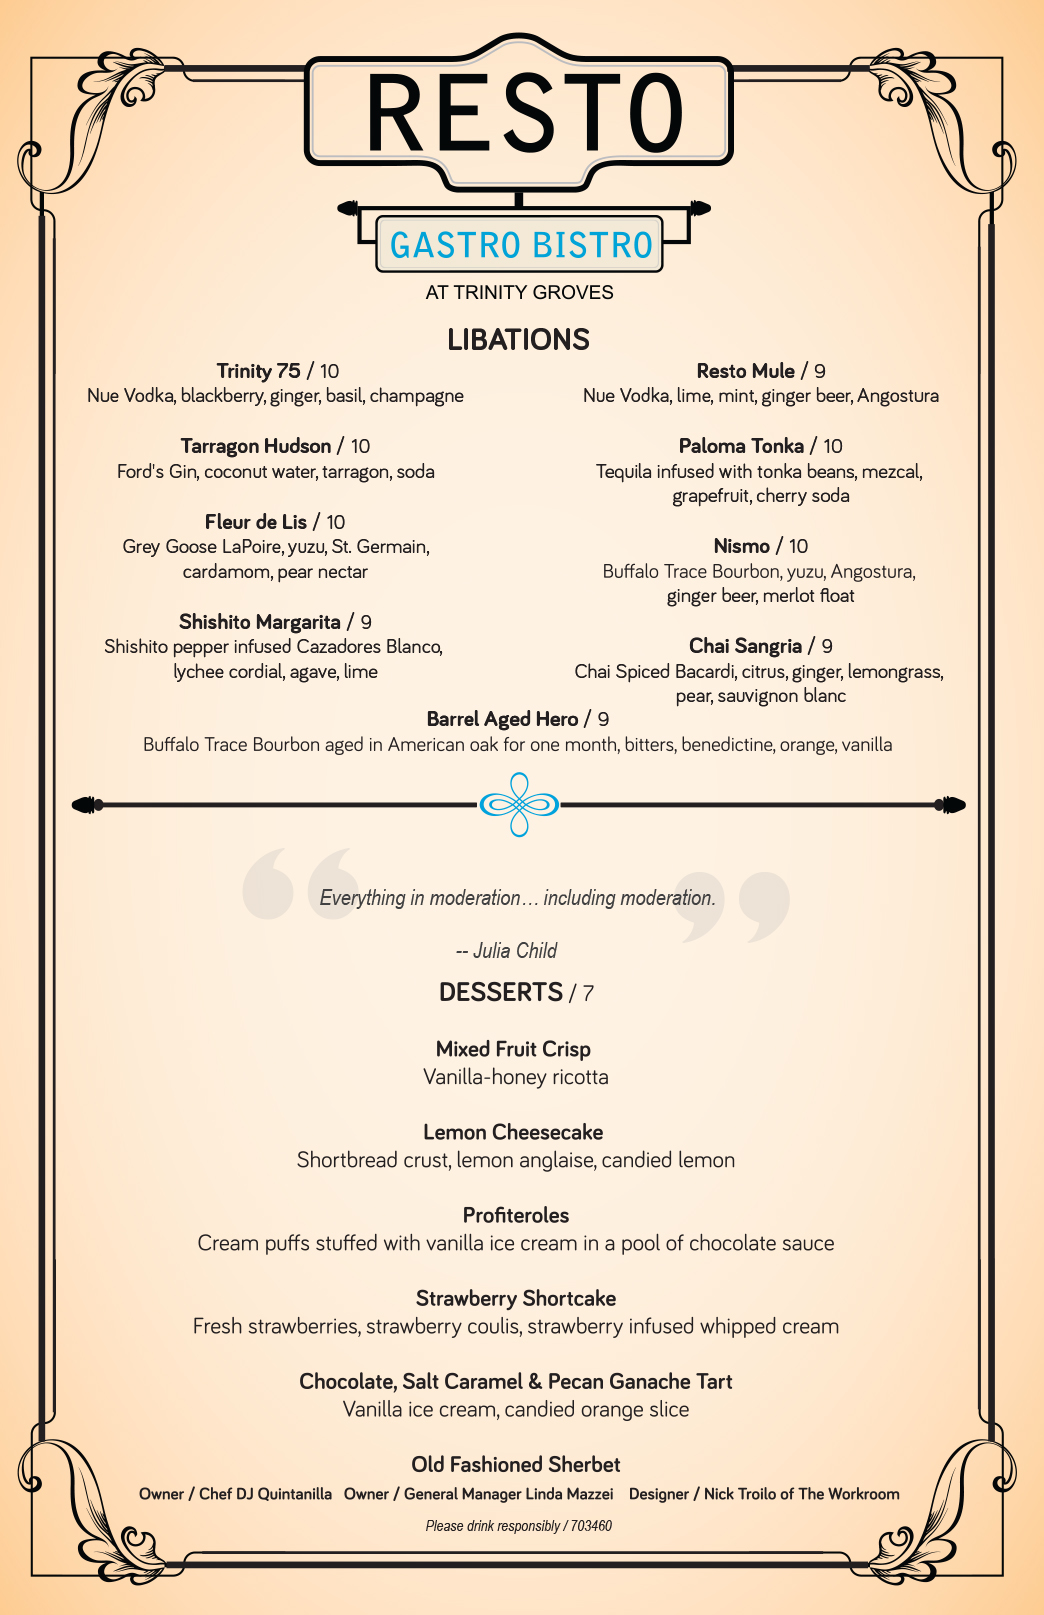 Resto Gastro Bistro Restaurant Menus menu design Trinity Groves custom menus custom menu design